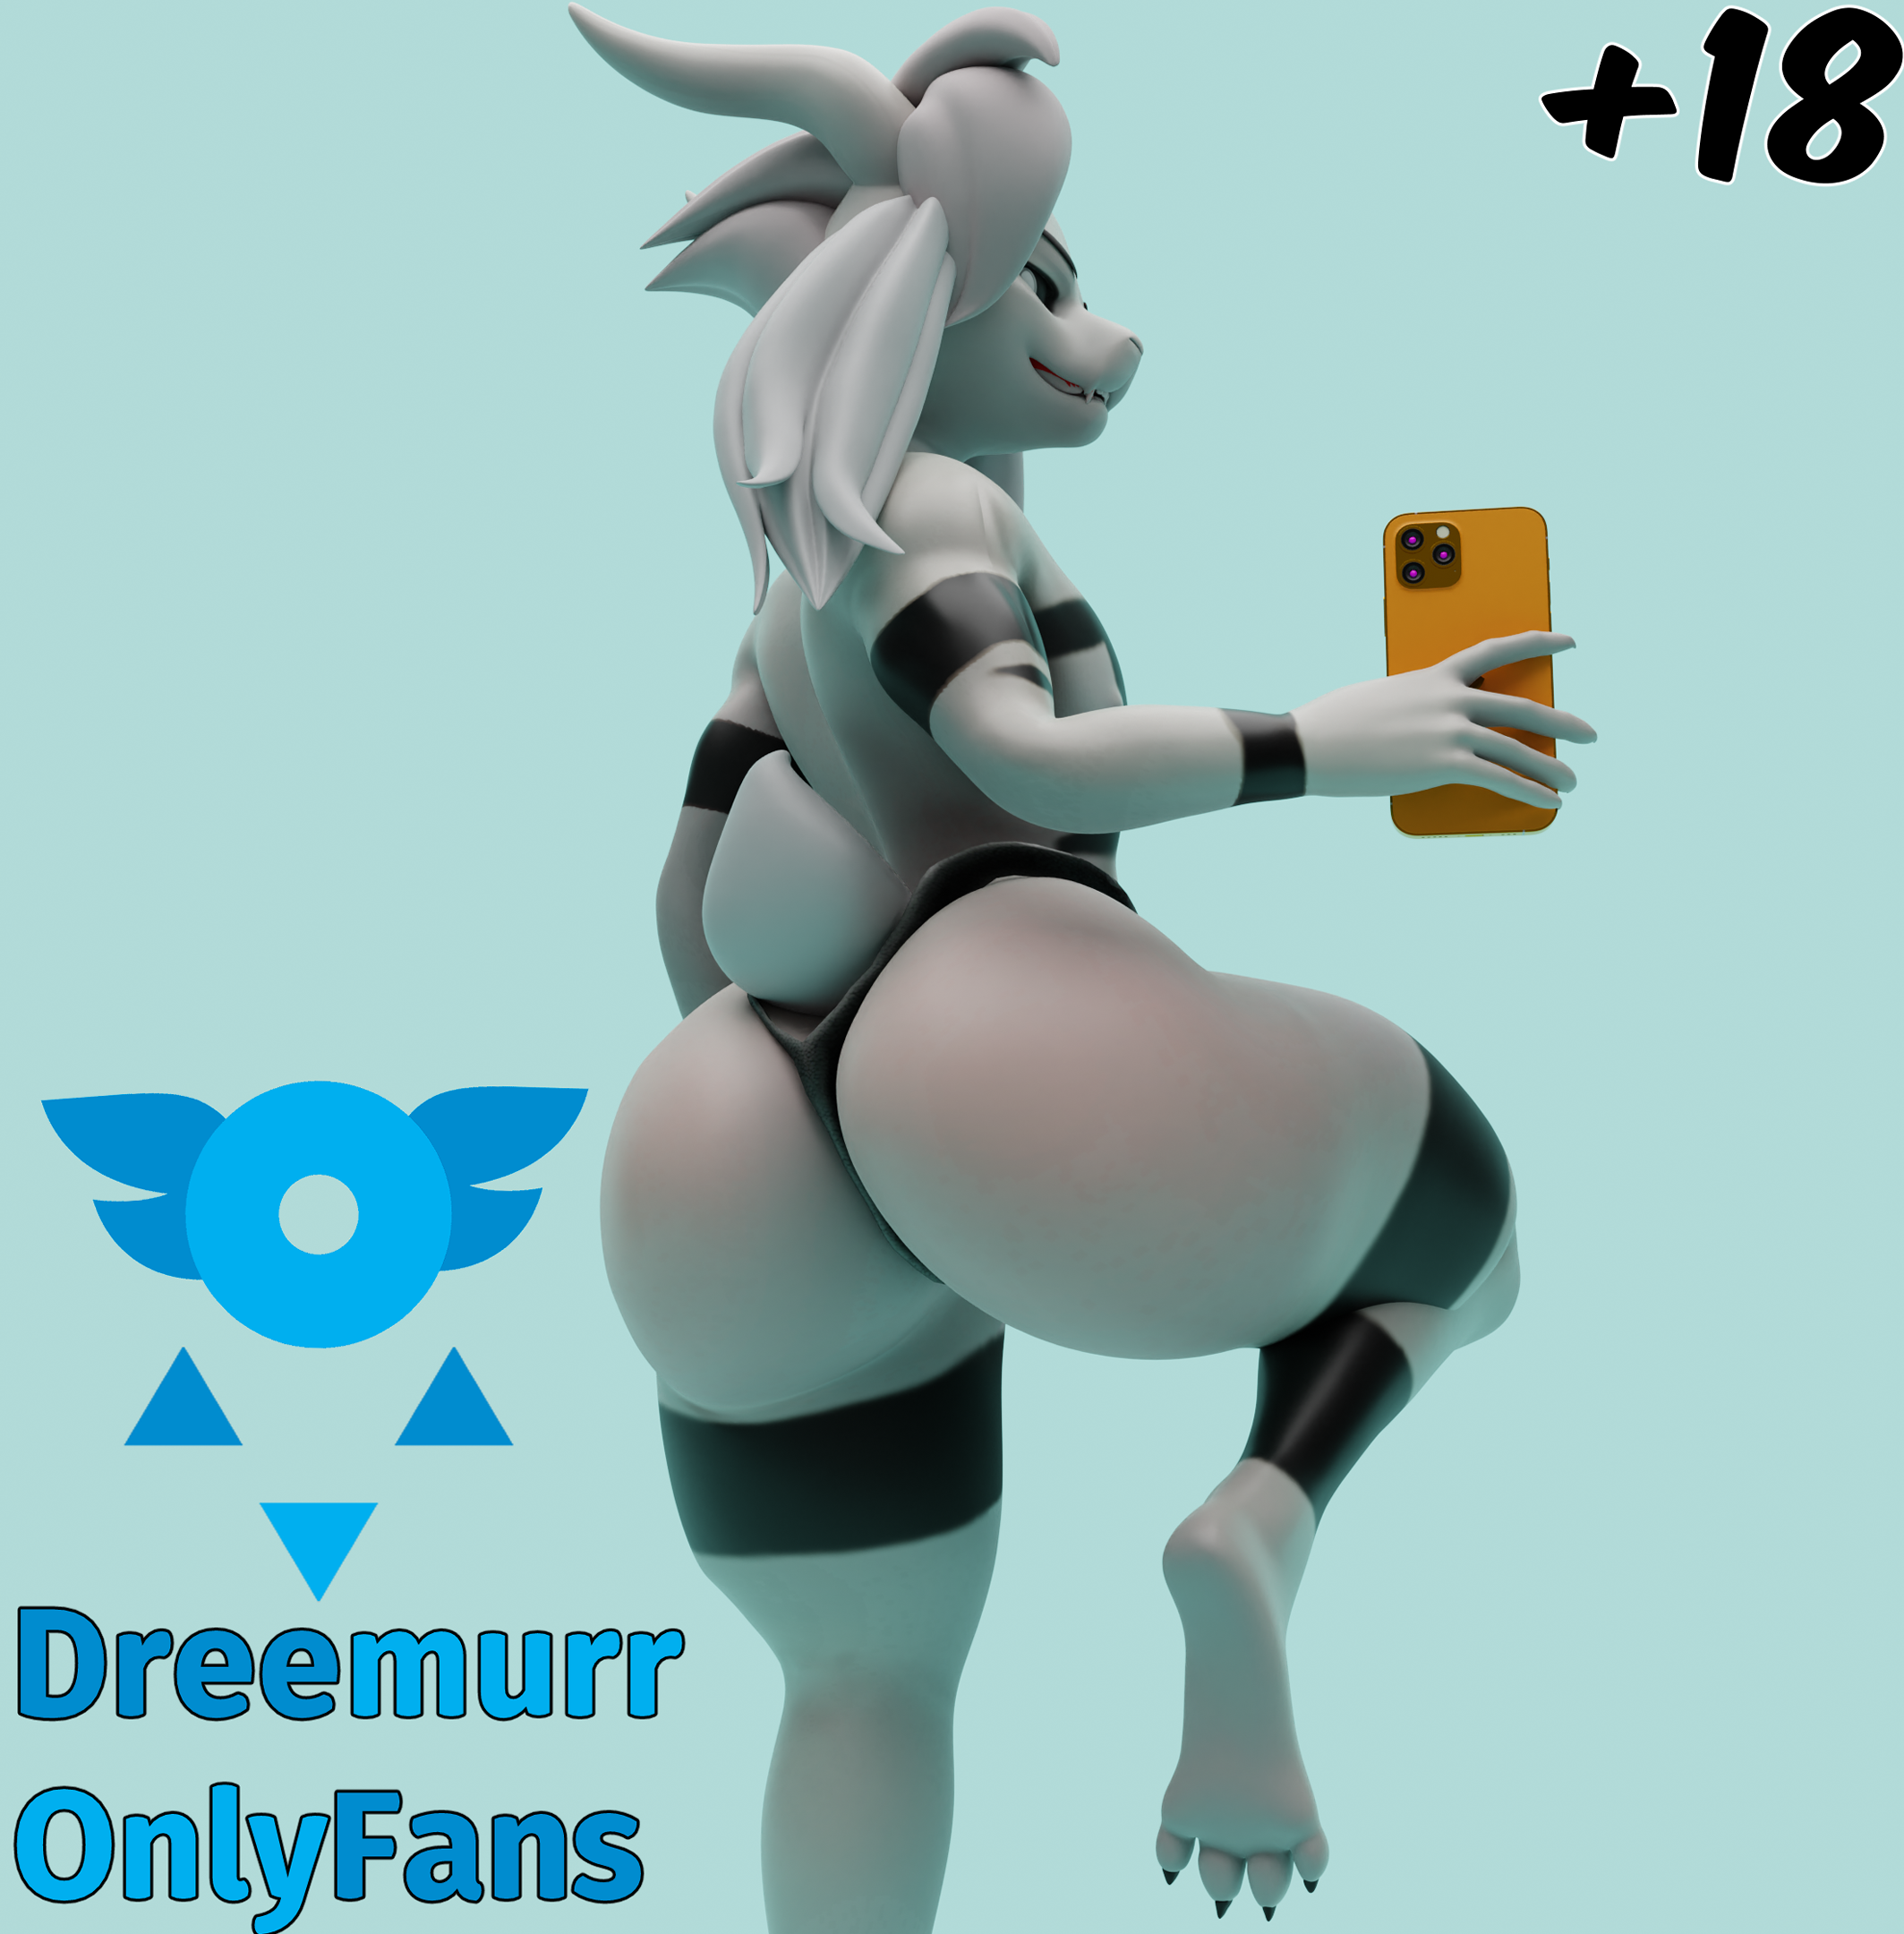 Dreemurr OnlyFans Vol. 1 (+18)